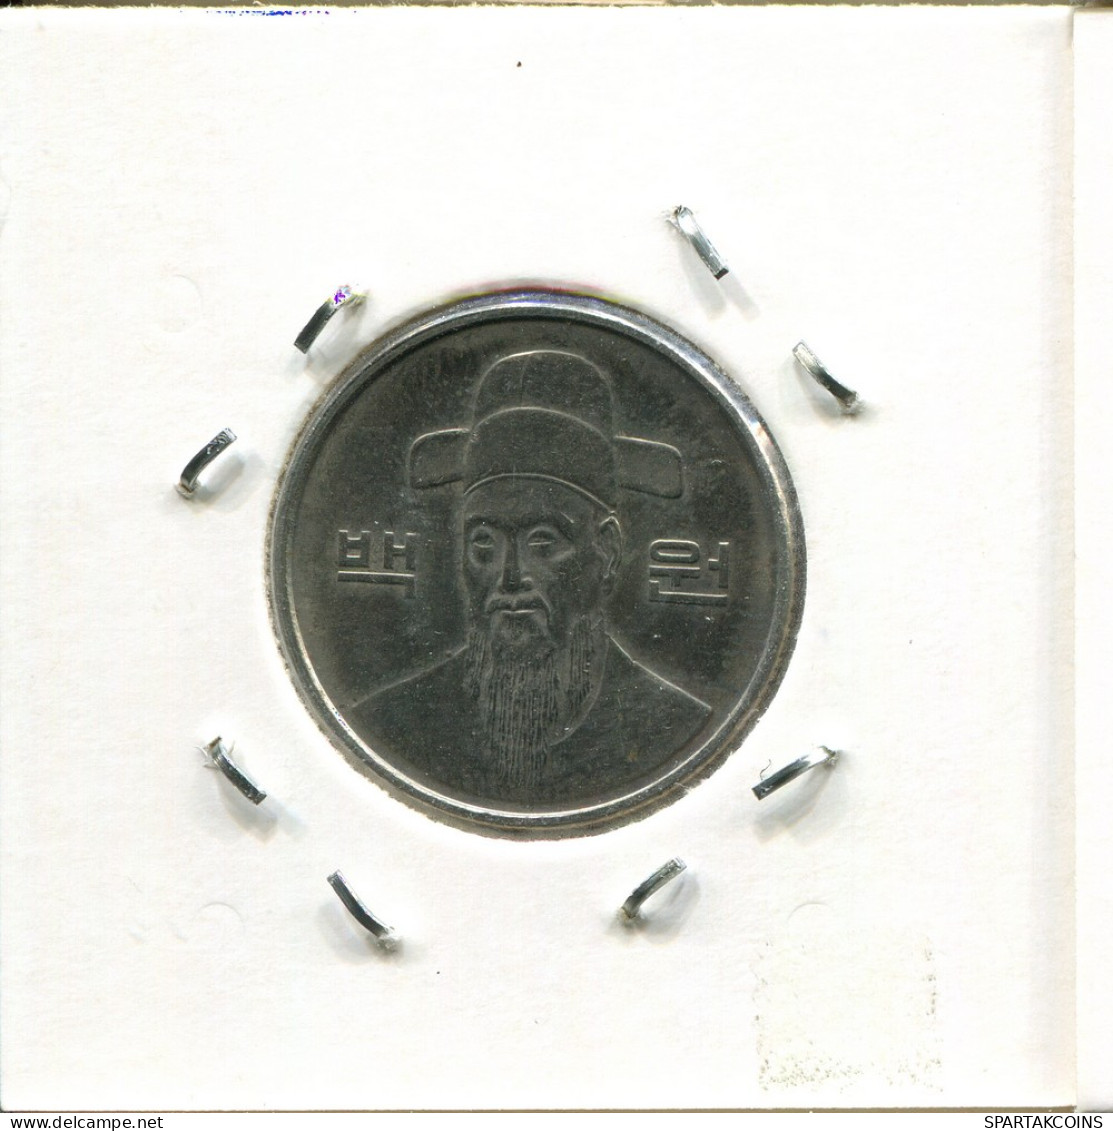 100 WON 1986 SOUTH KOREA Coin #AS056.U - Korea, South